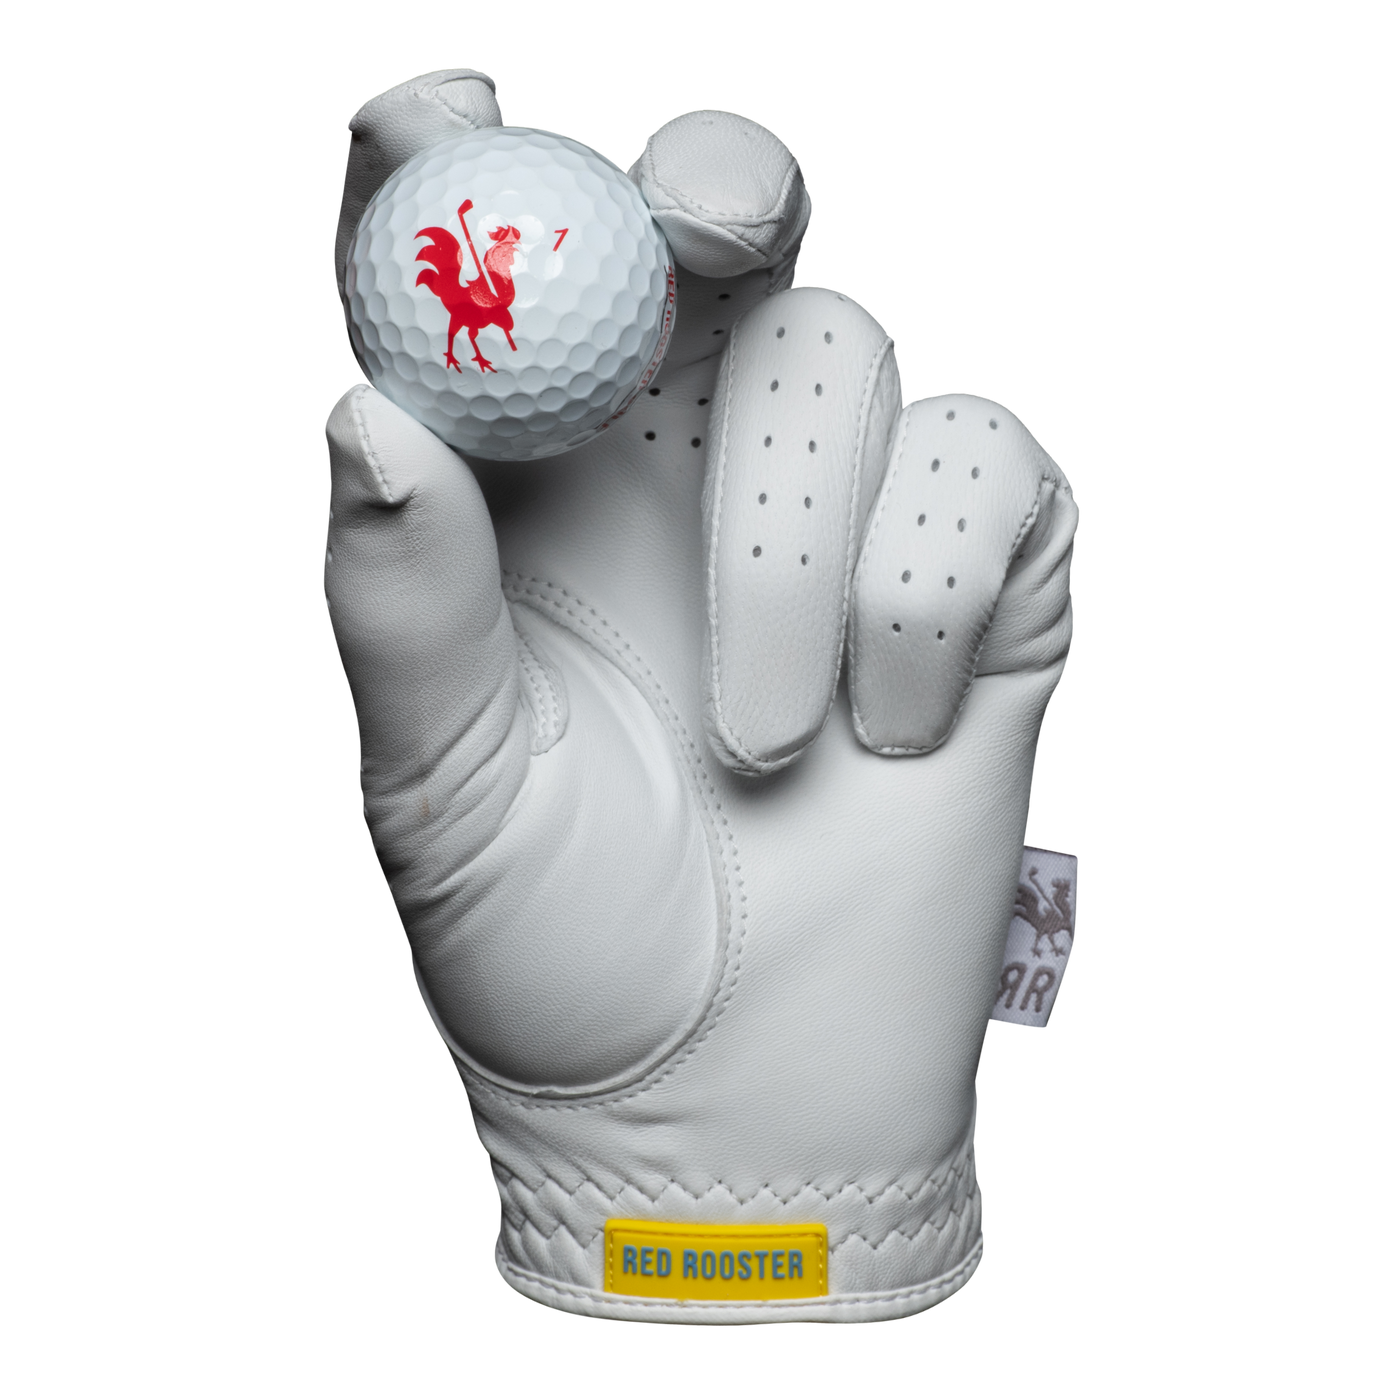 The Sunnyside golf glove holding golf ball